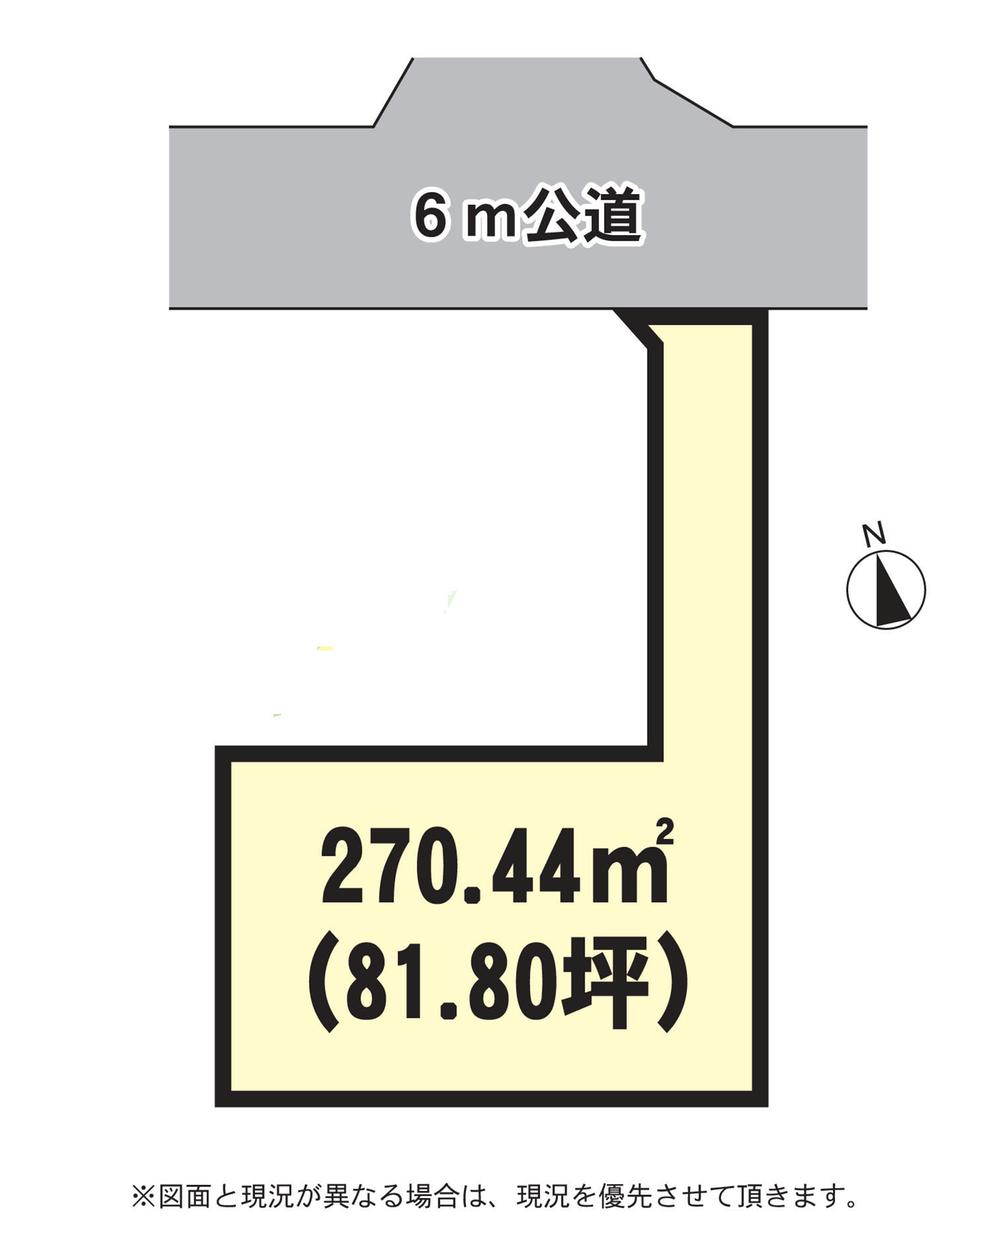 Compartment figure. Land price 6.5 million yen, Land area 270.44 sq m